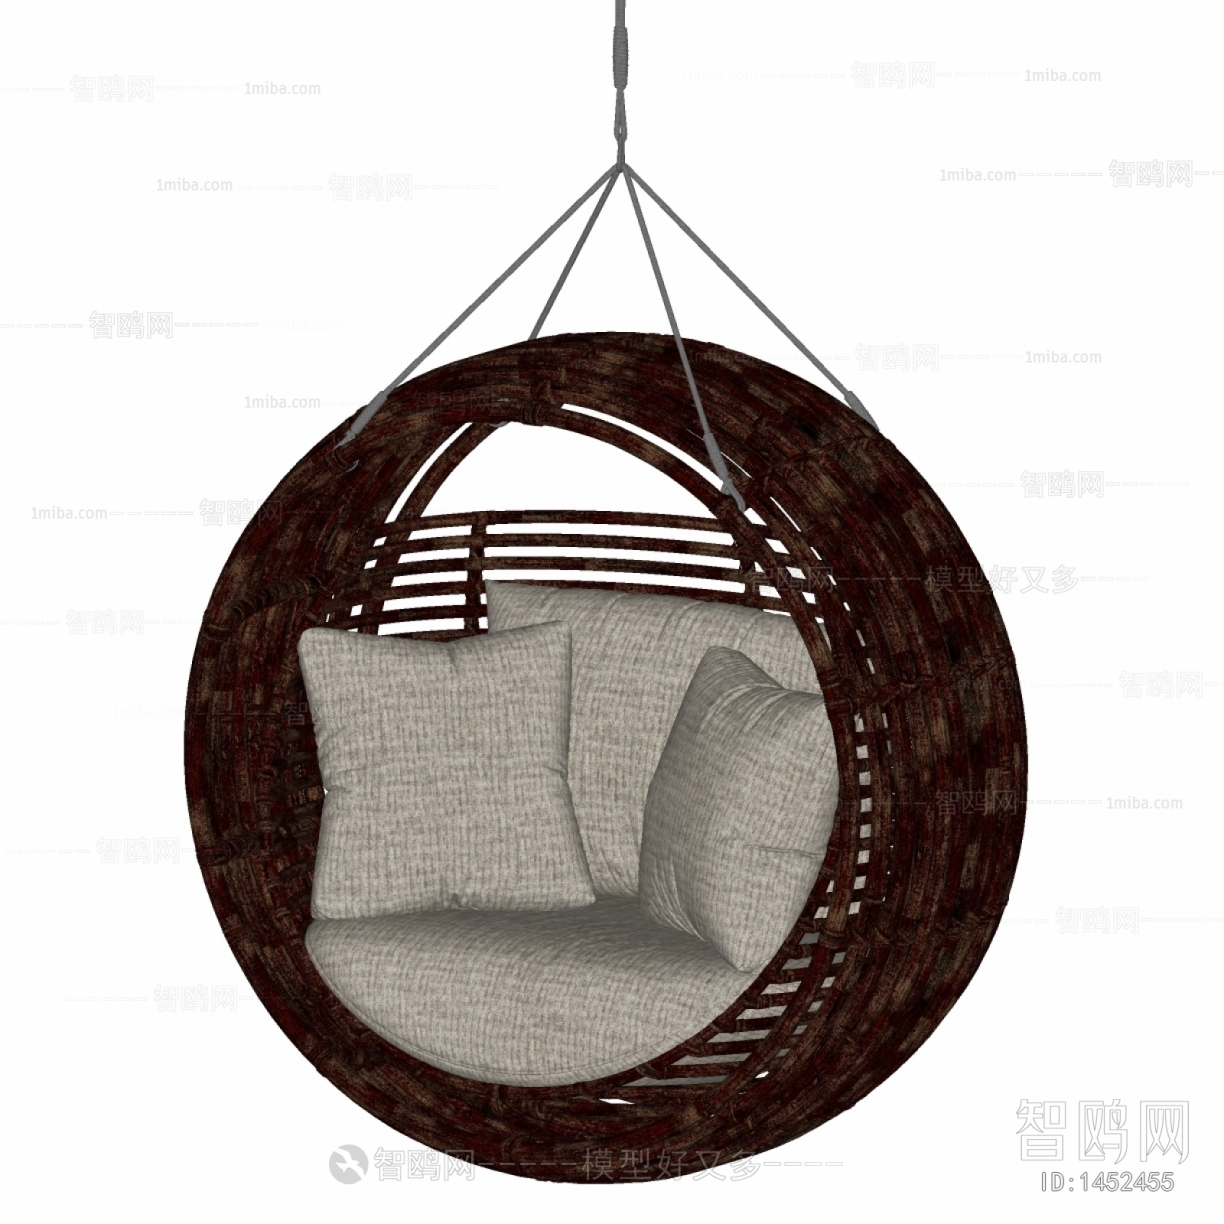 Wabi-sabi Style Hanging Chair